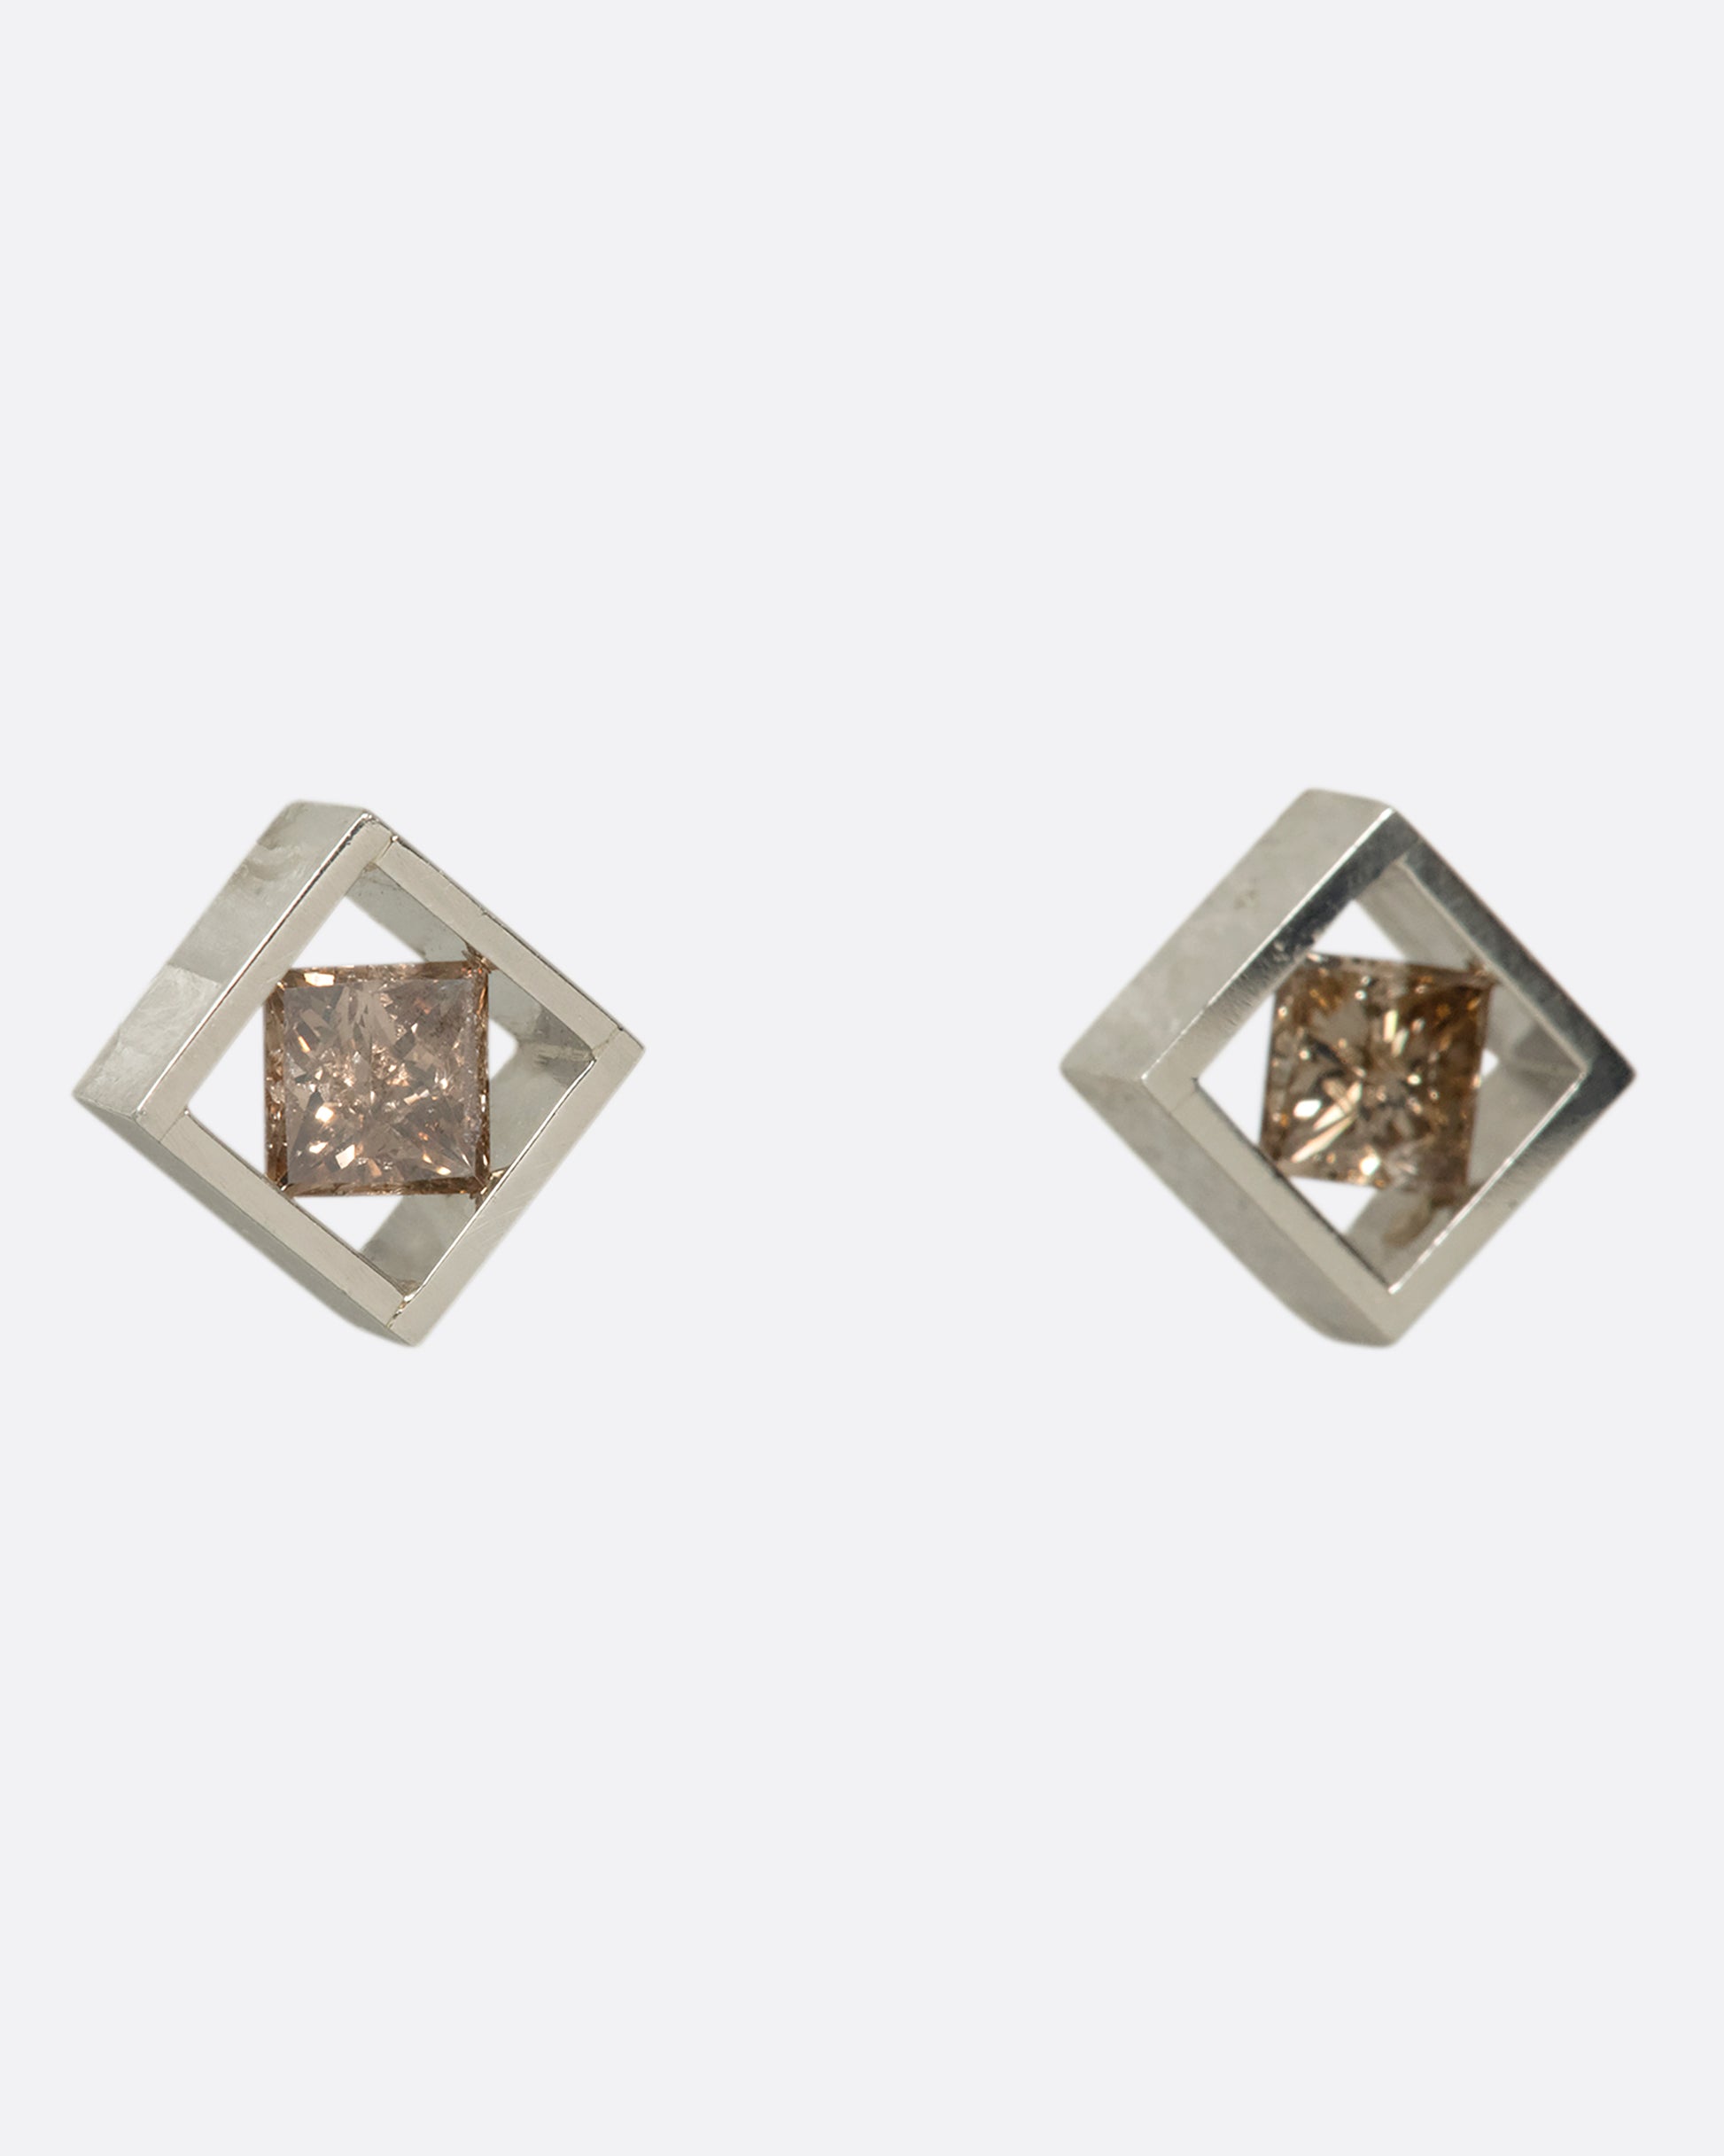 A pair of princess-cut cognac diamonds stretching across a square platinum setting